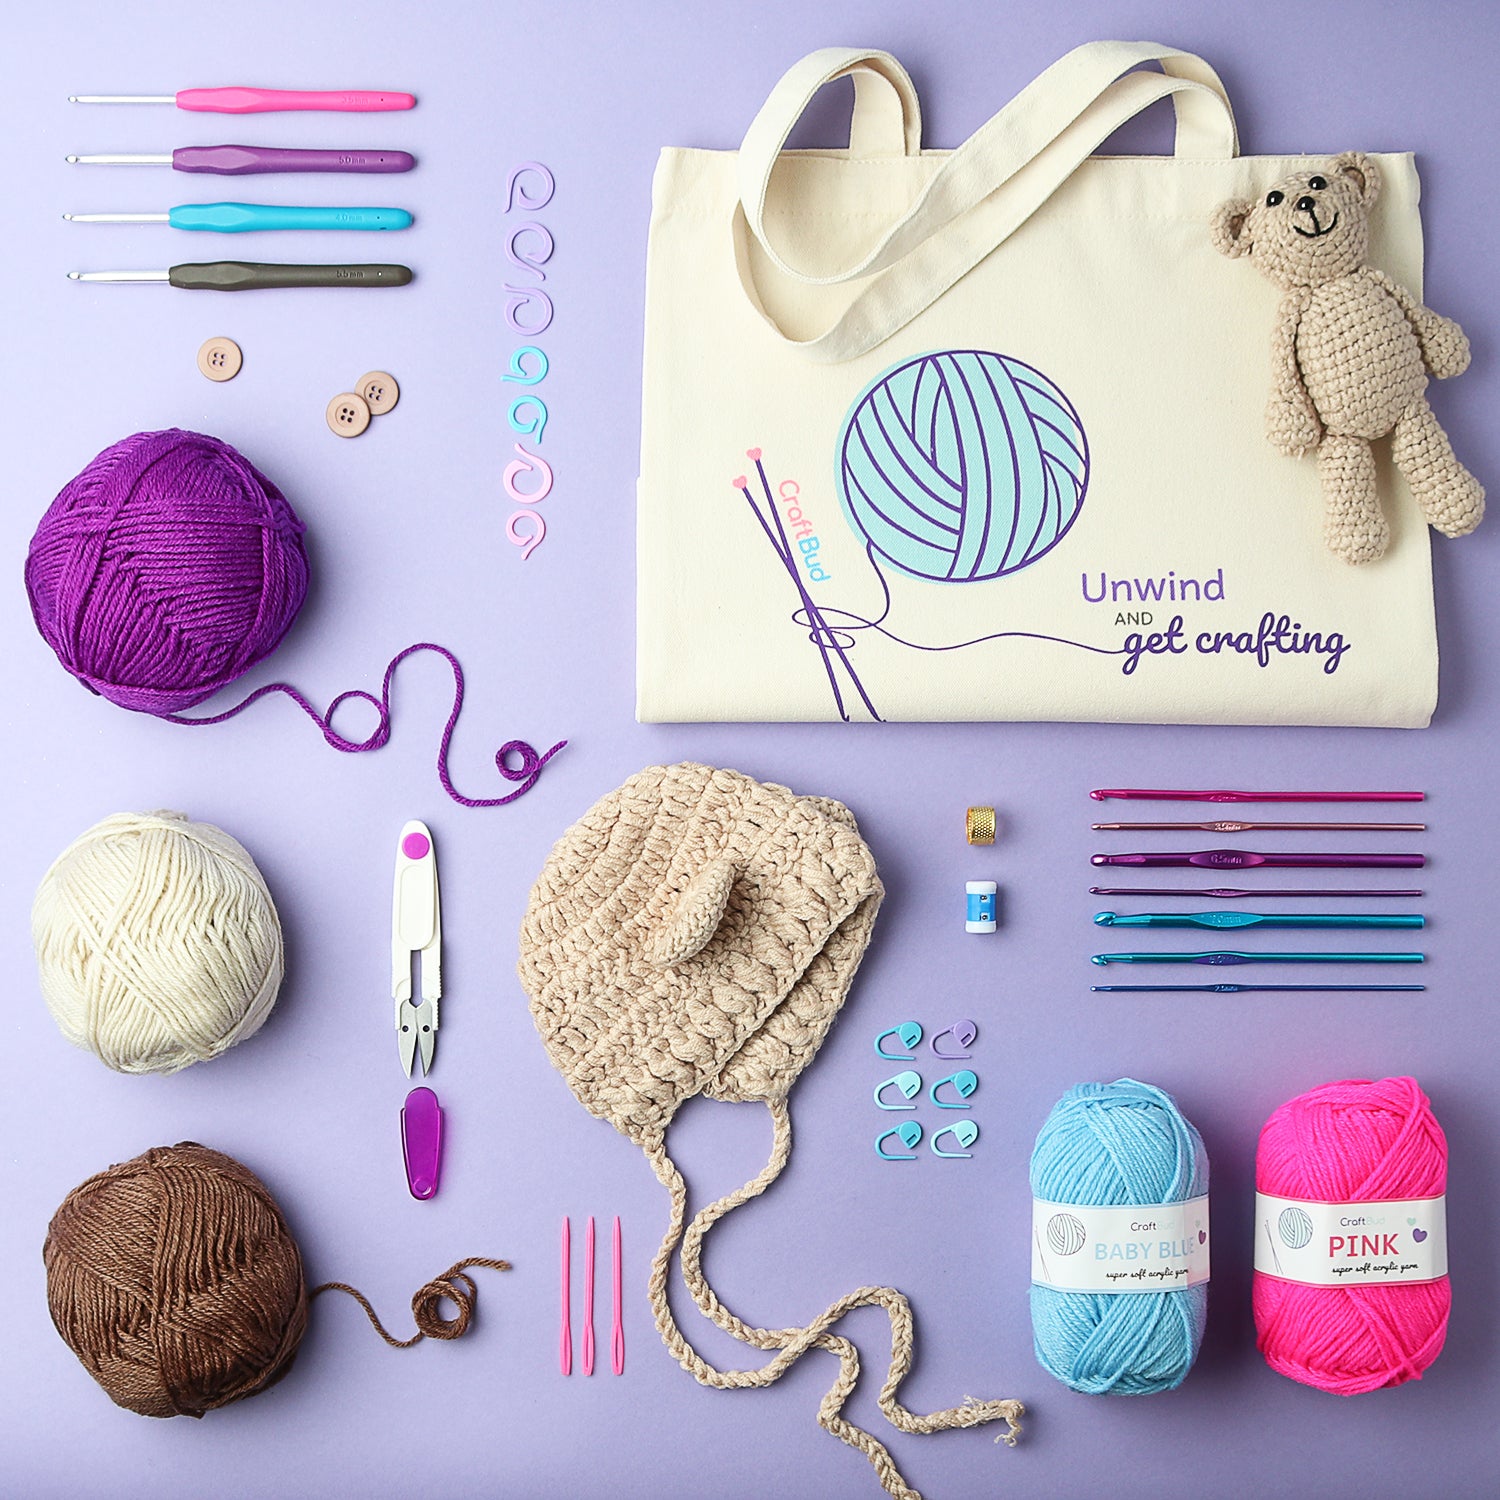 Crochet Kit Acrylic As Shown For Beginners,Crochet Kit For Adults